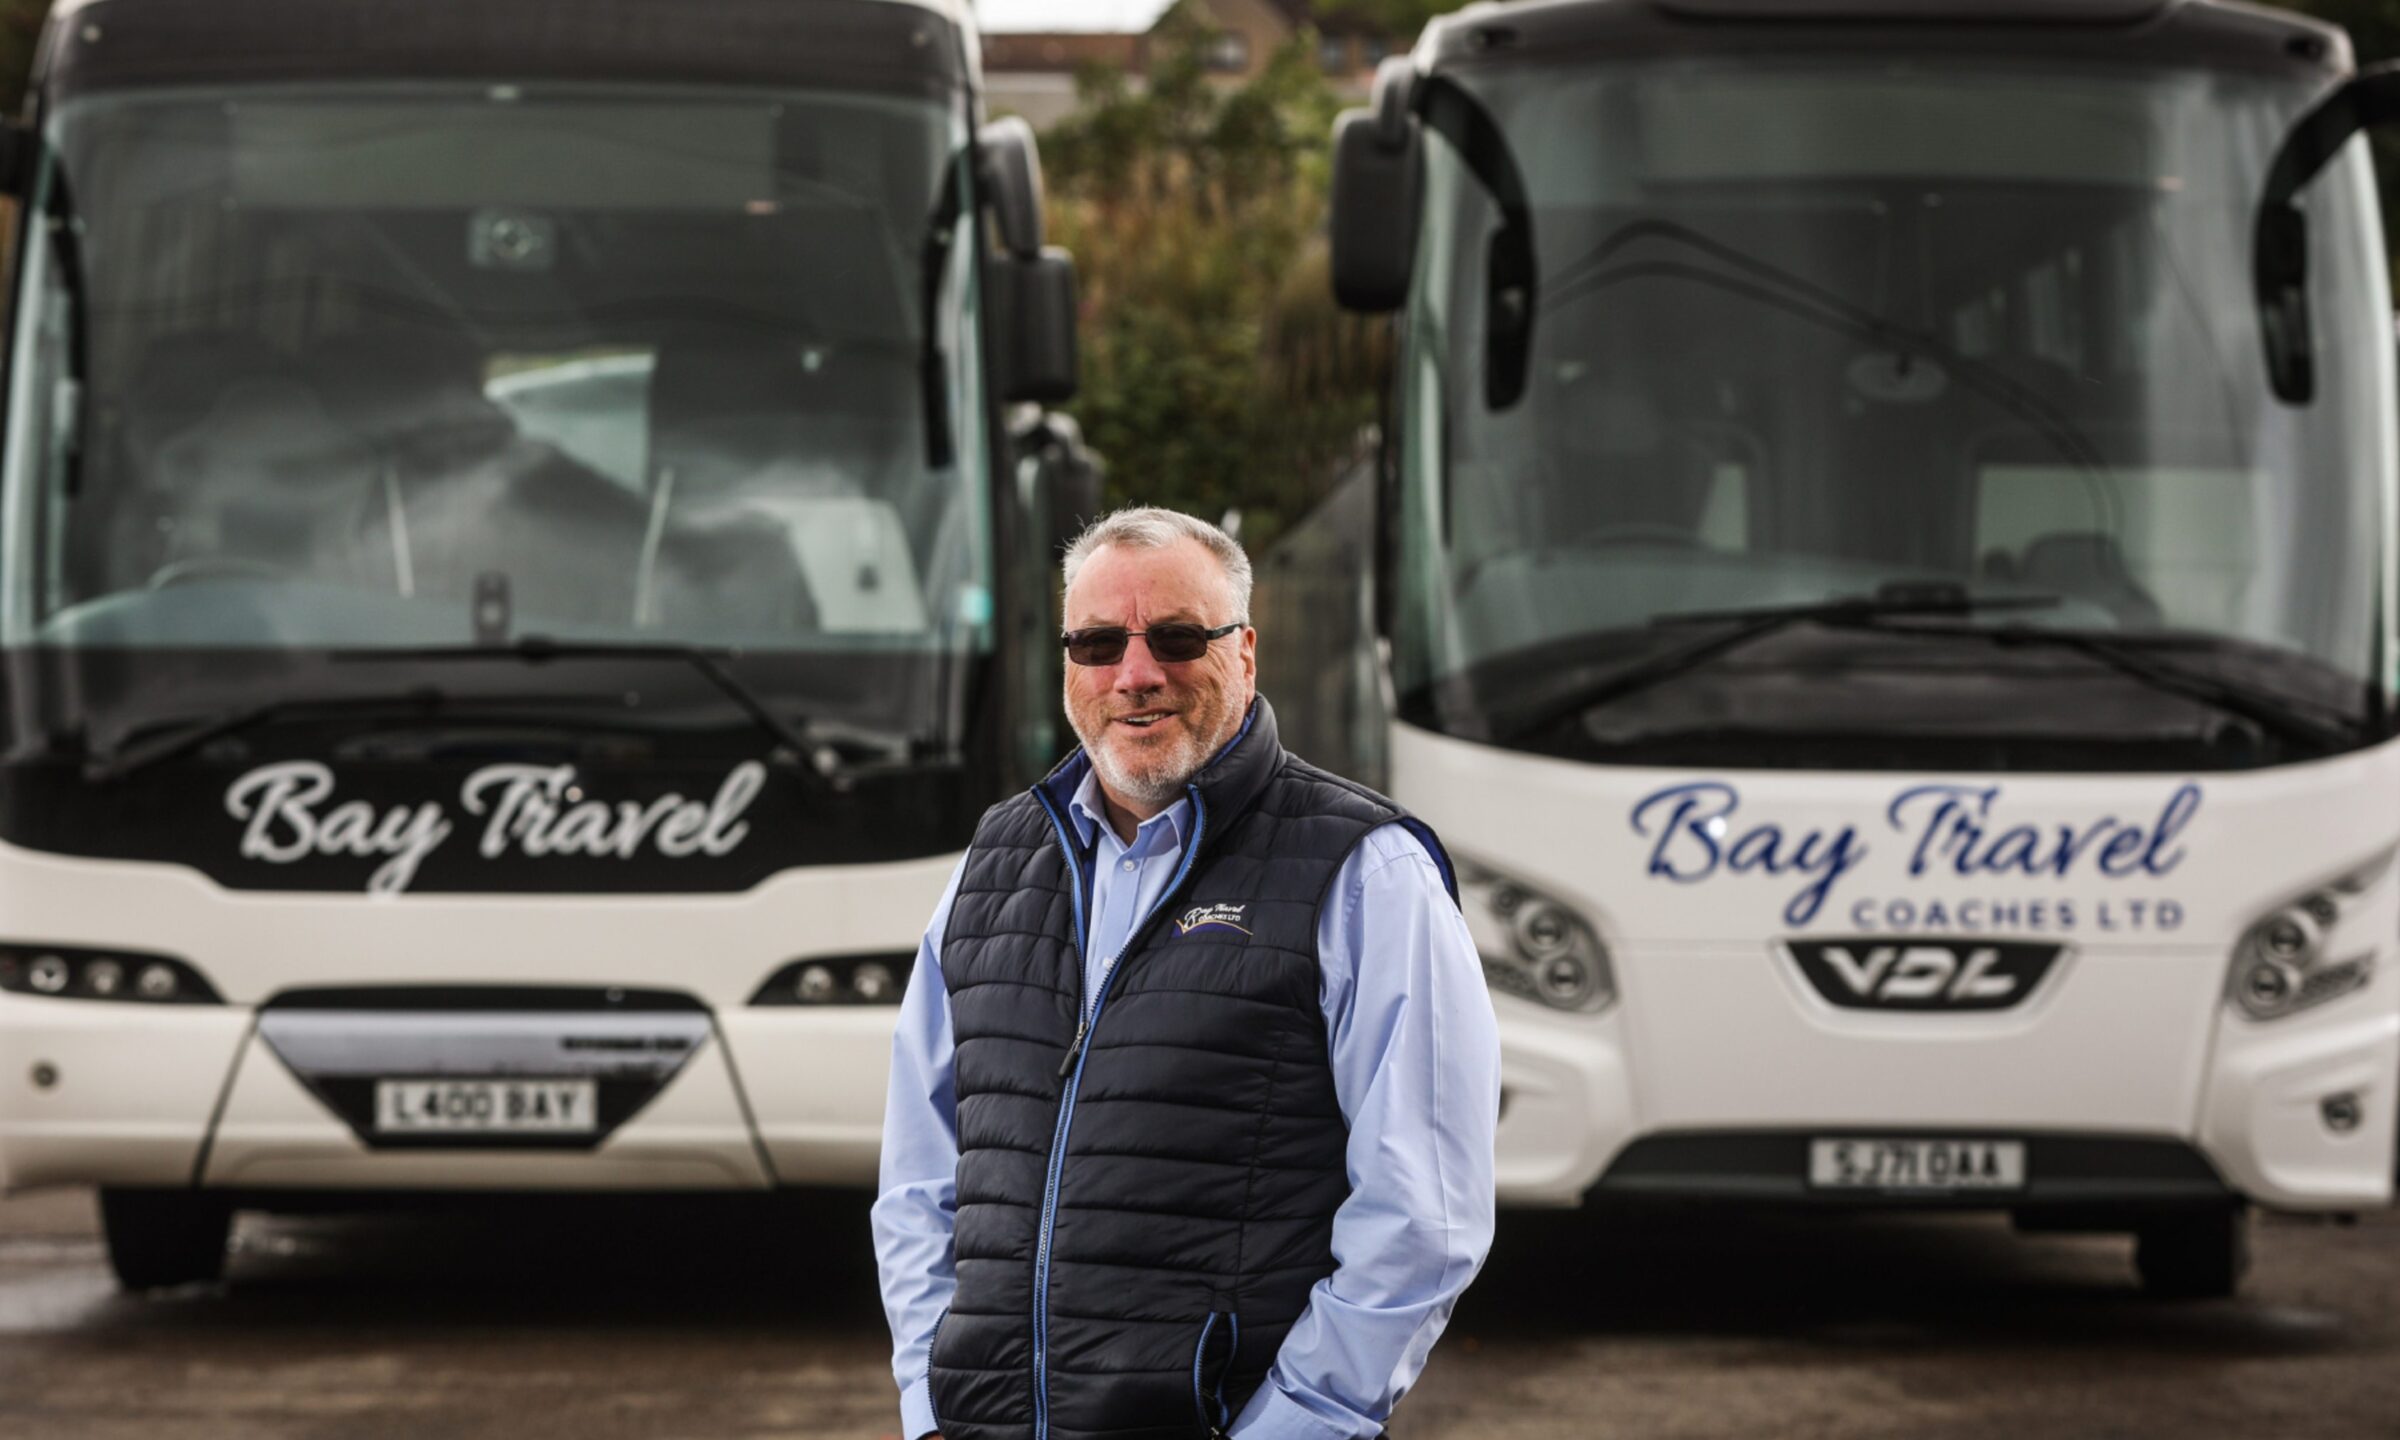 Co-founder Iain Robertson at Bay Travel Coaches' base in Lochgelly. Image: Mhairi Edwards/DC Thomson.